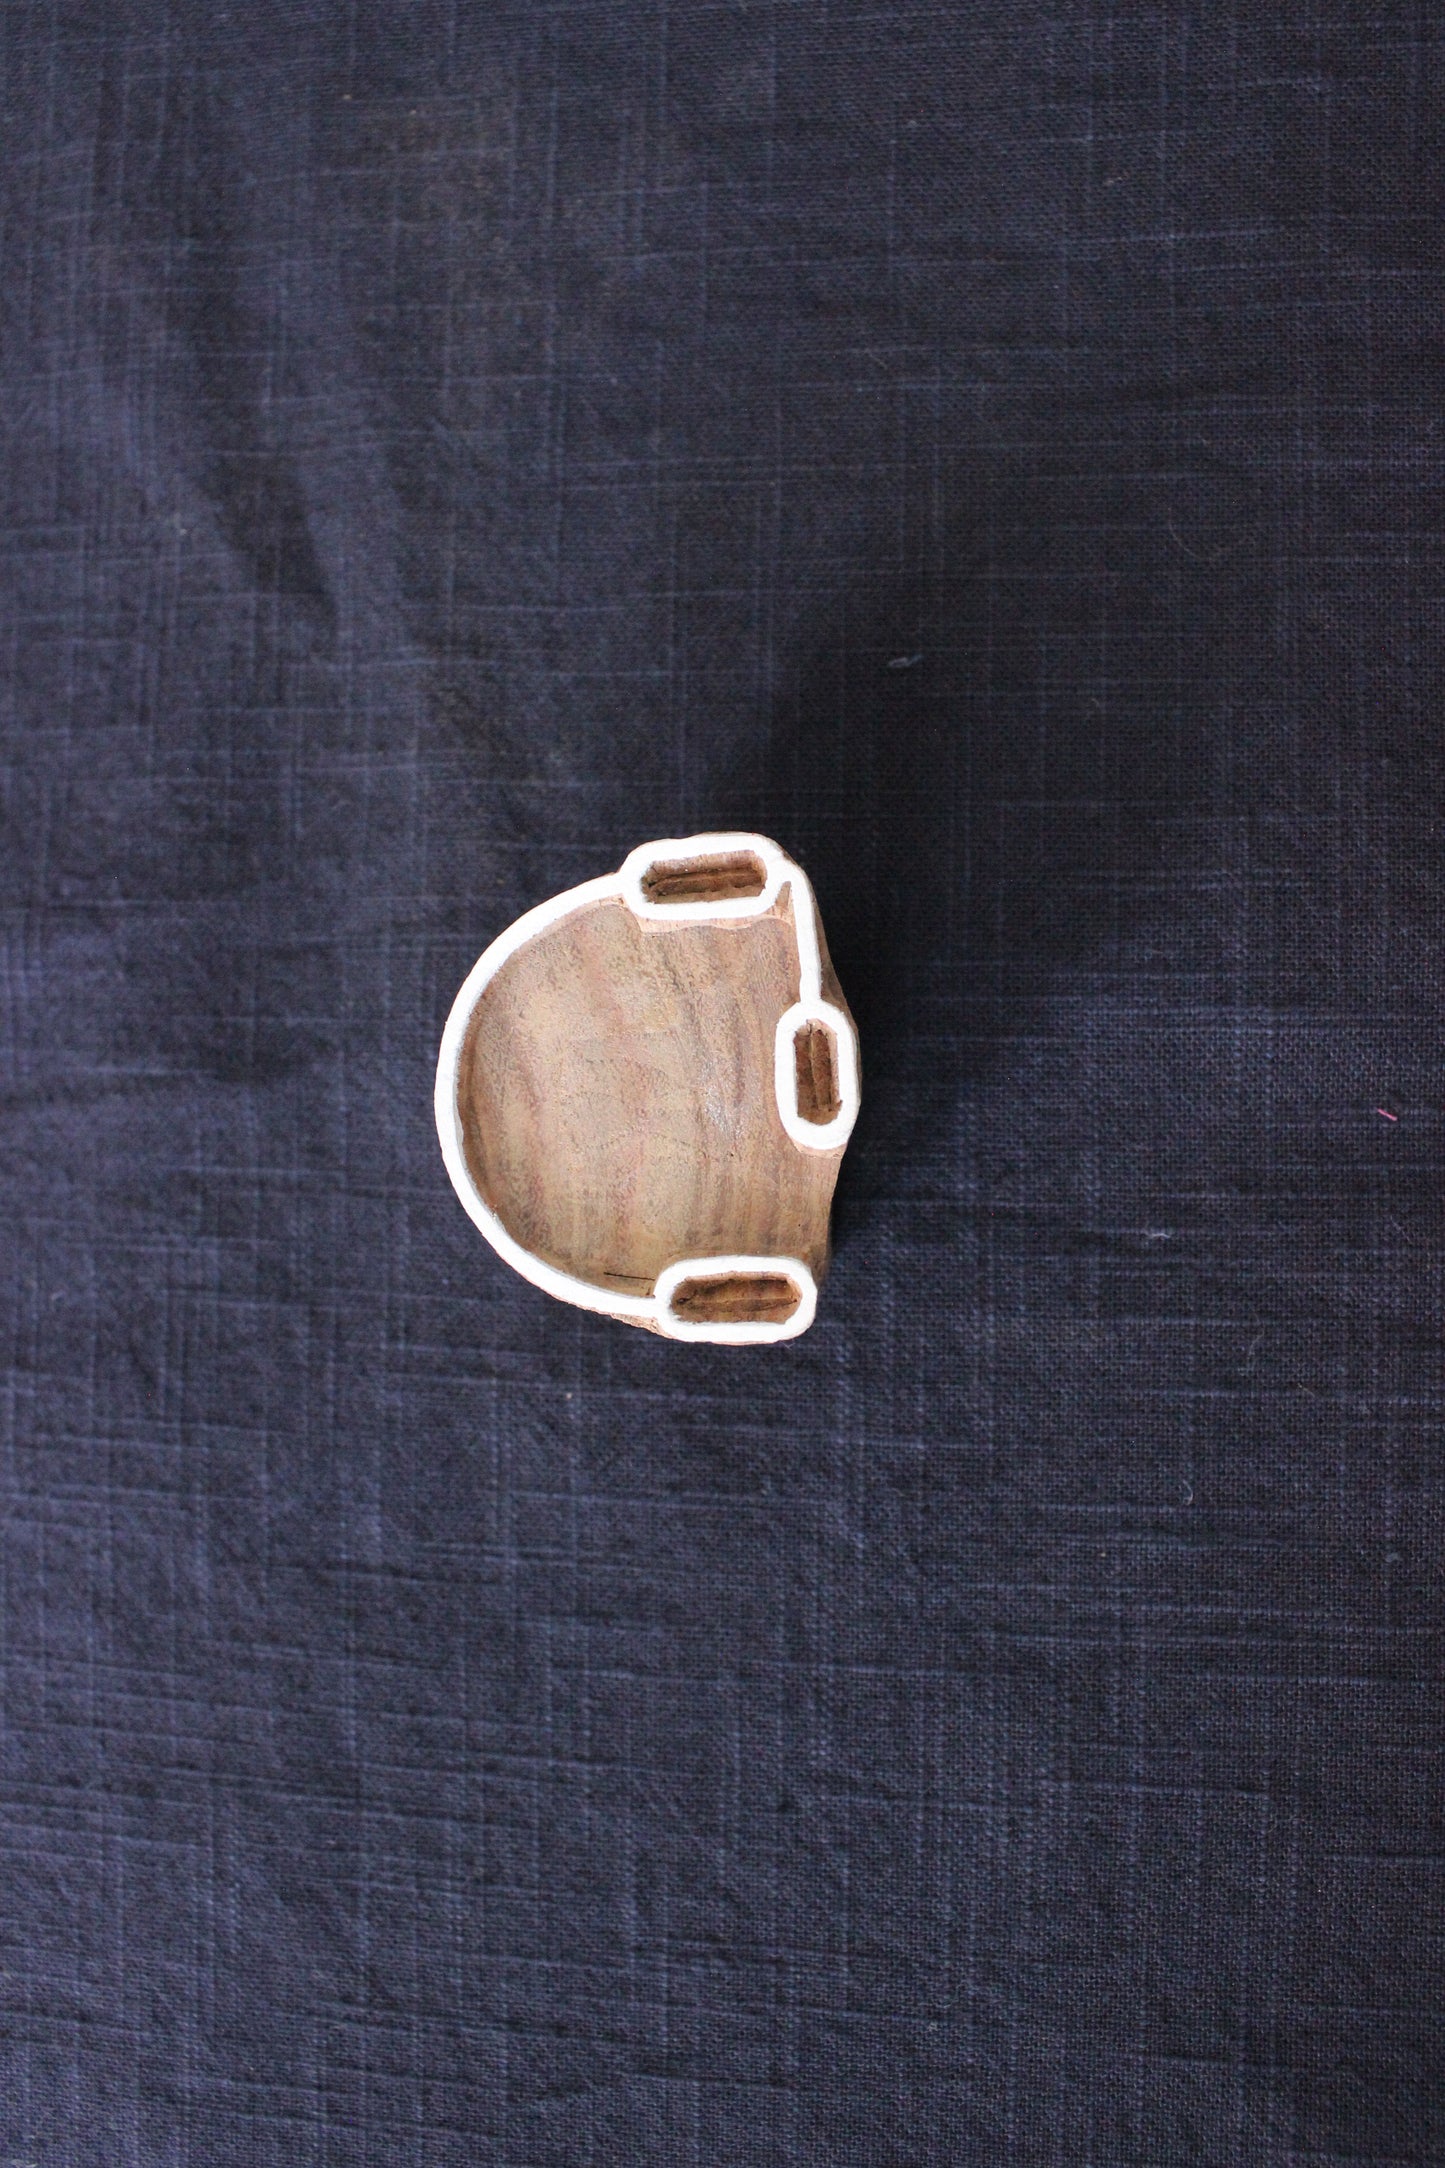 Headphone Stamp Hand Carved Wood Block Stamp Handmade Fabric Stamp Carve Textile Printing Block For Printing Hand Carved Soap Making Stamp Traditional Wooden Printing Block